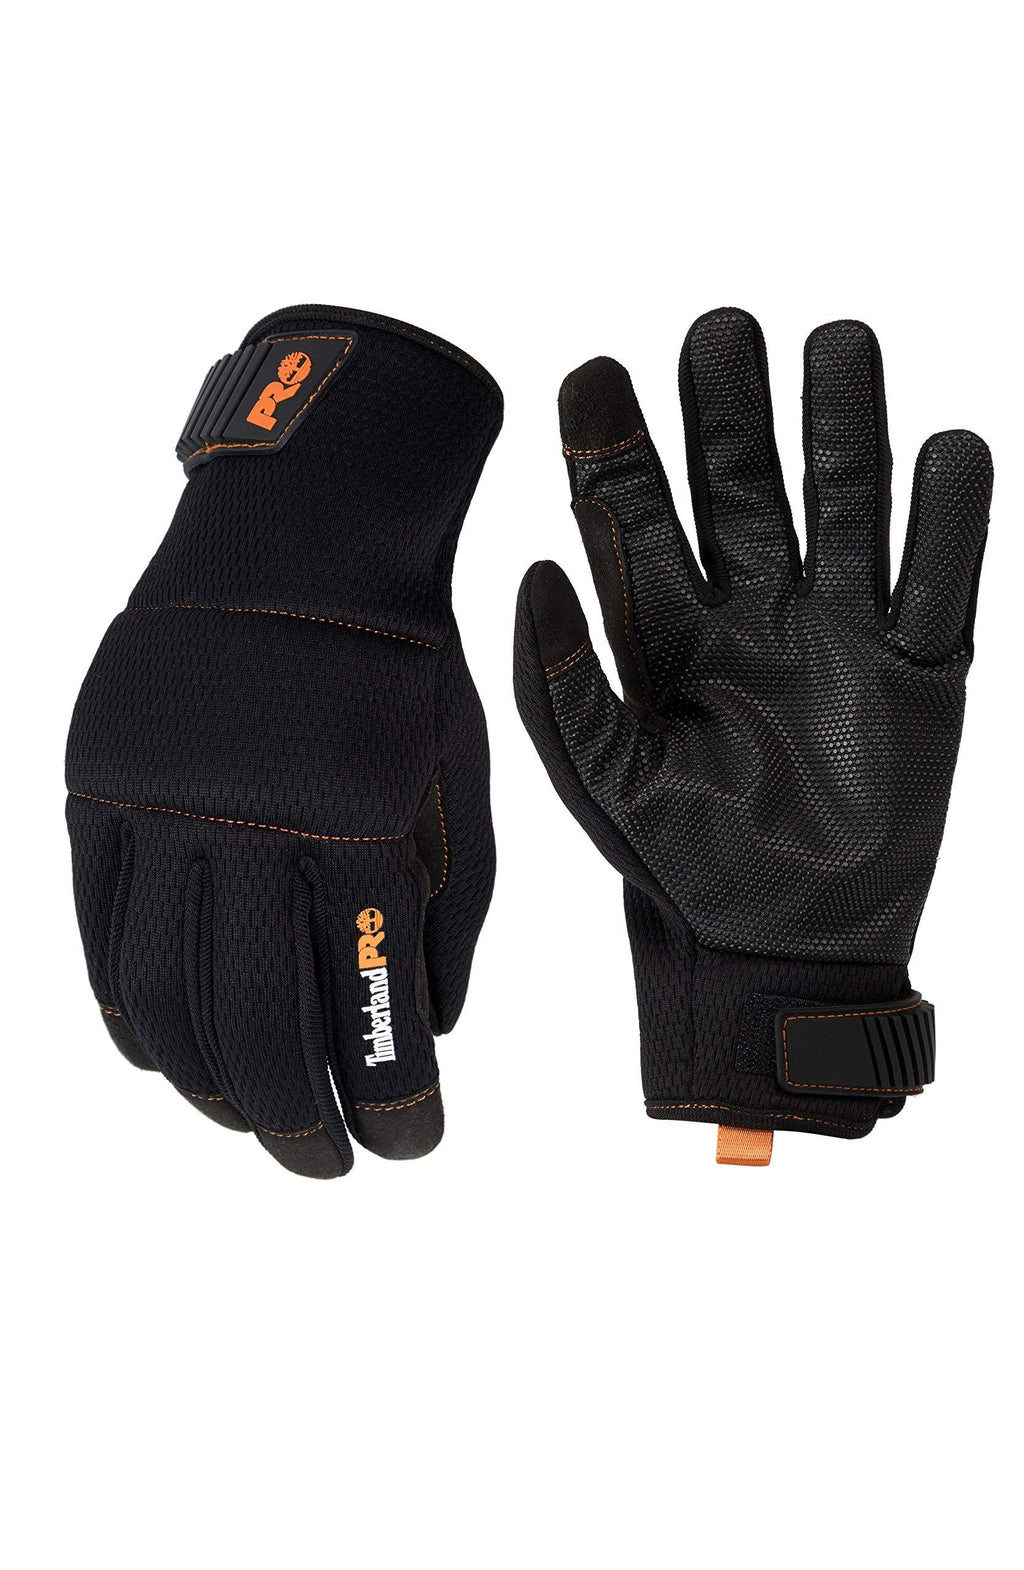 [Australia] - Timberland PRO Men's Low Impact Work Glove Black Medium 